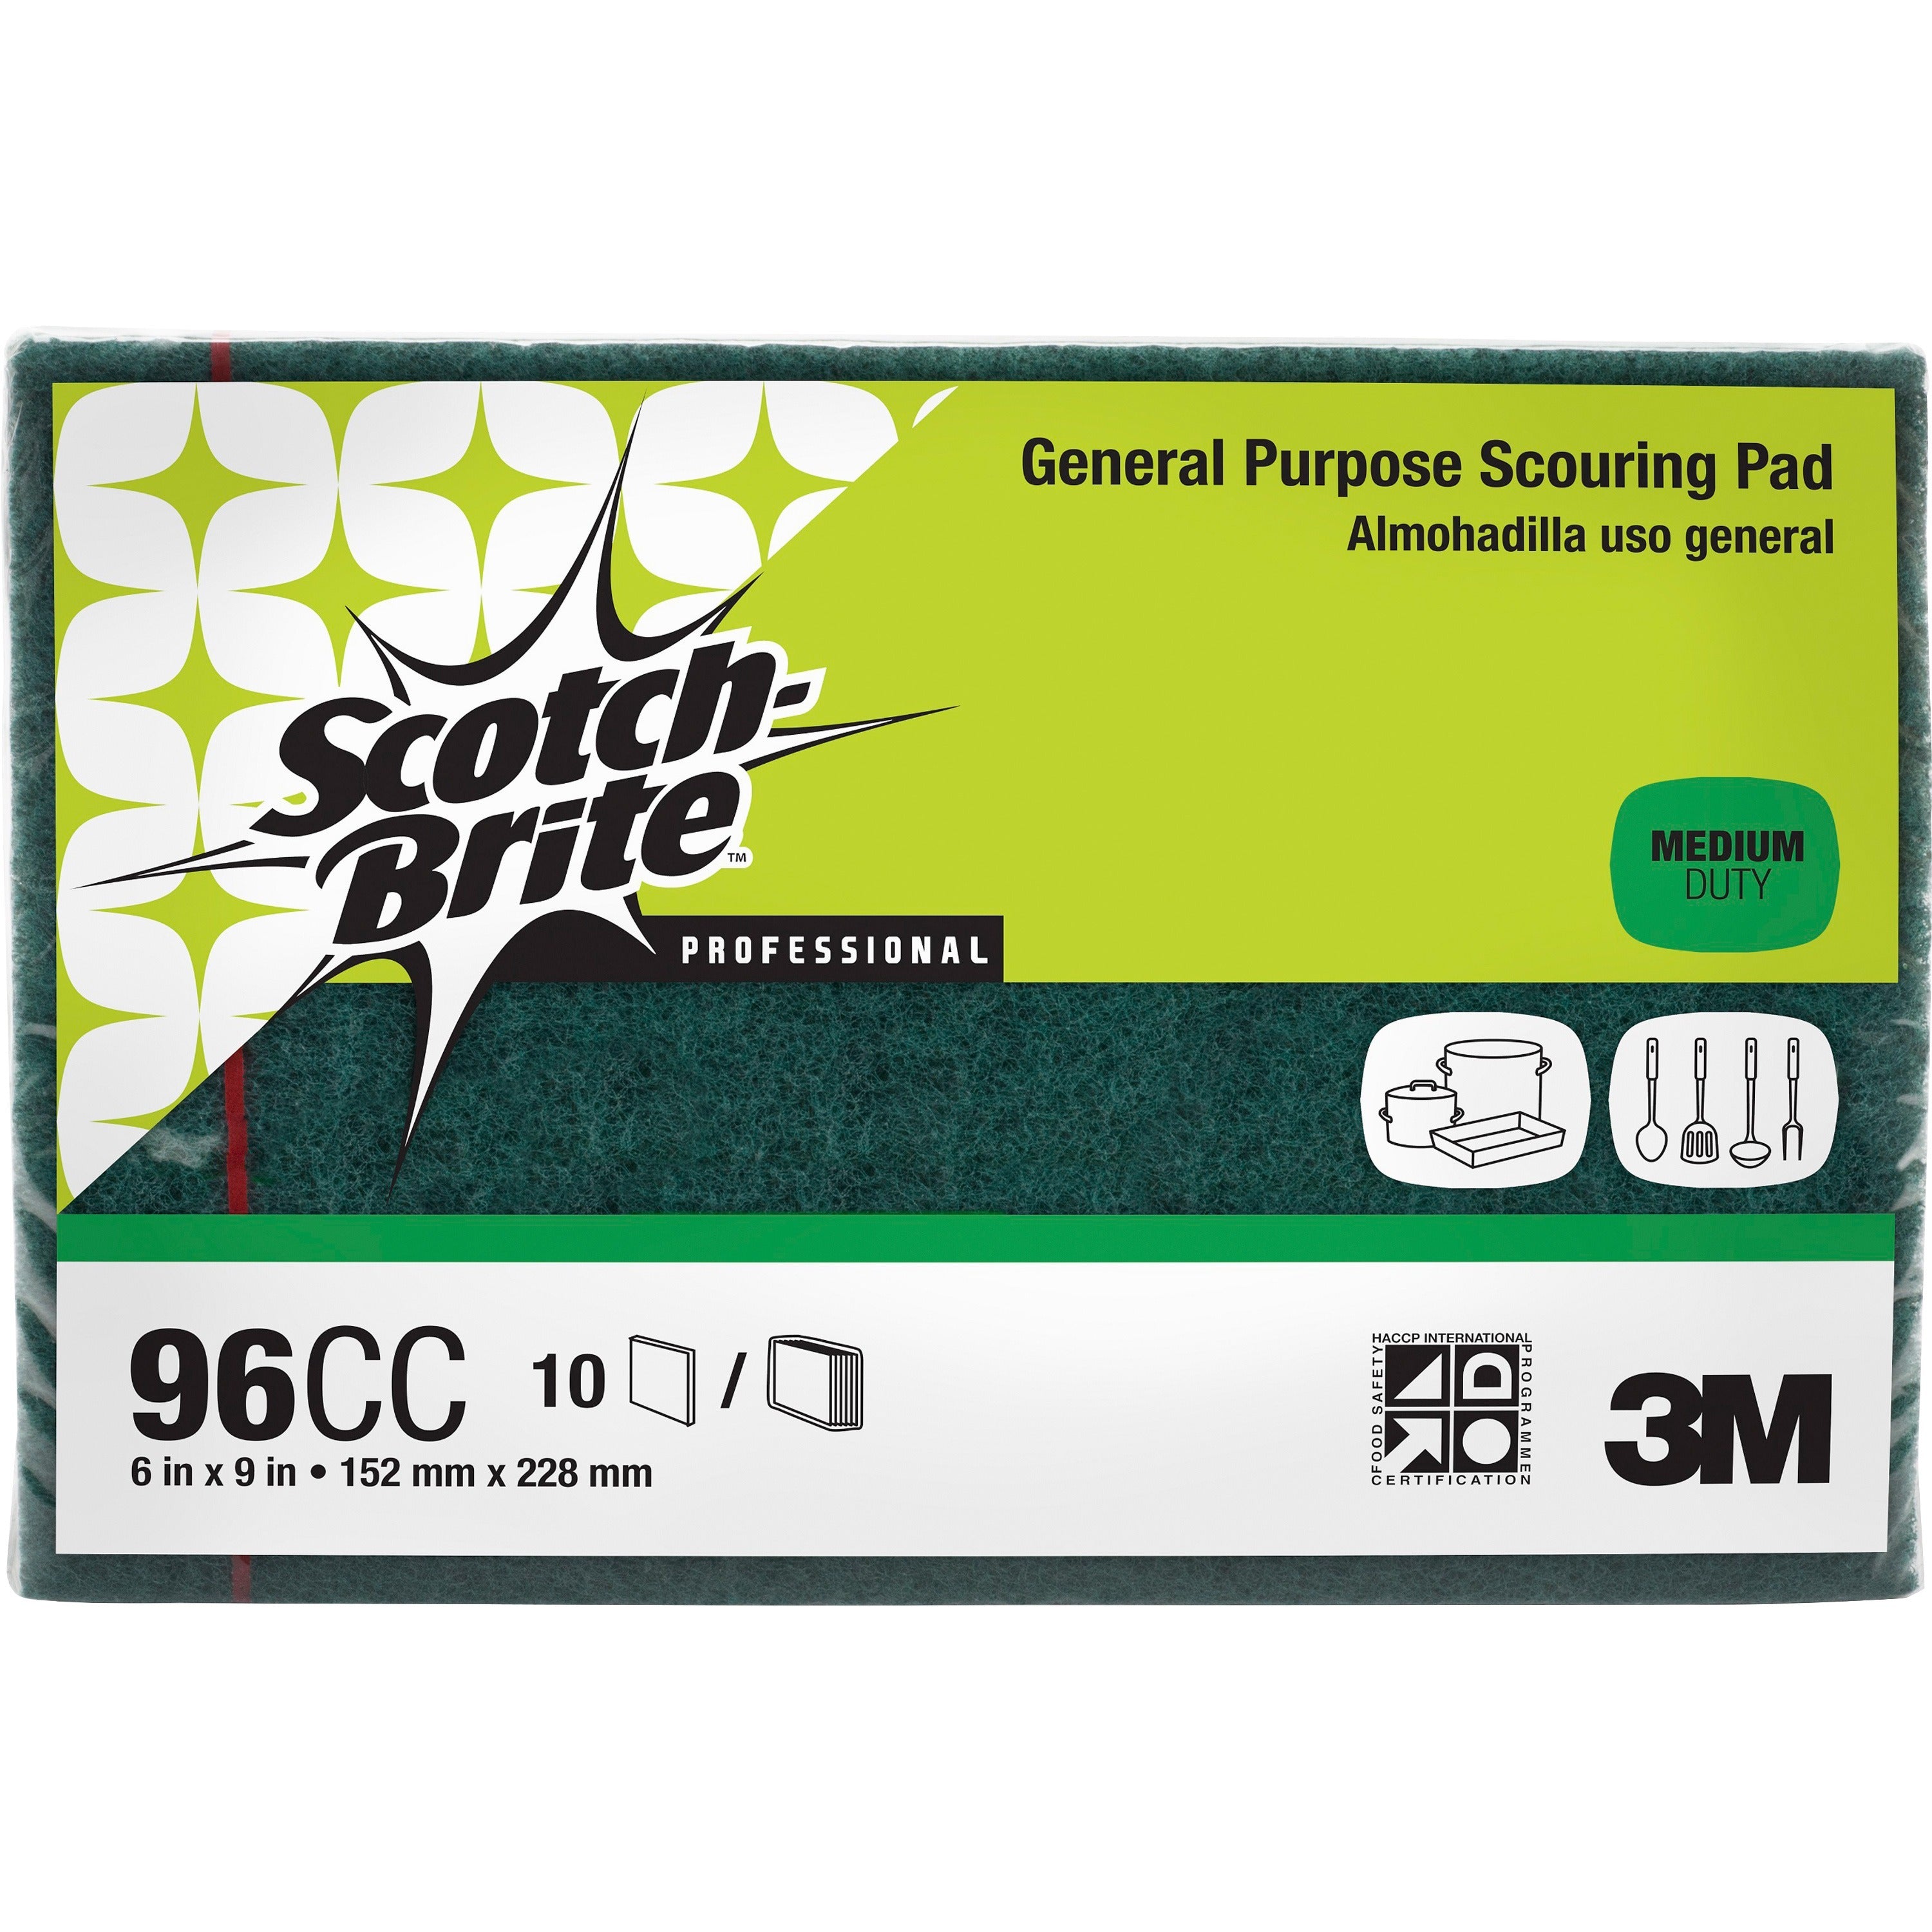 scotch-brite-general-purpose-scouring-pads-6-width-x-9-length-60-carton-synthetic-fiber-green_mmm96ccct - 1